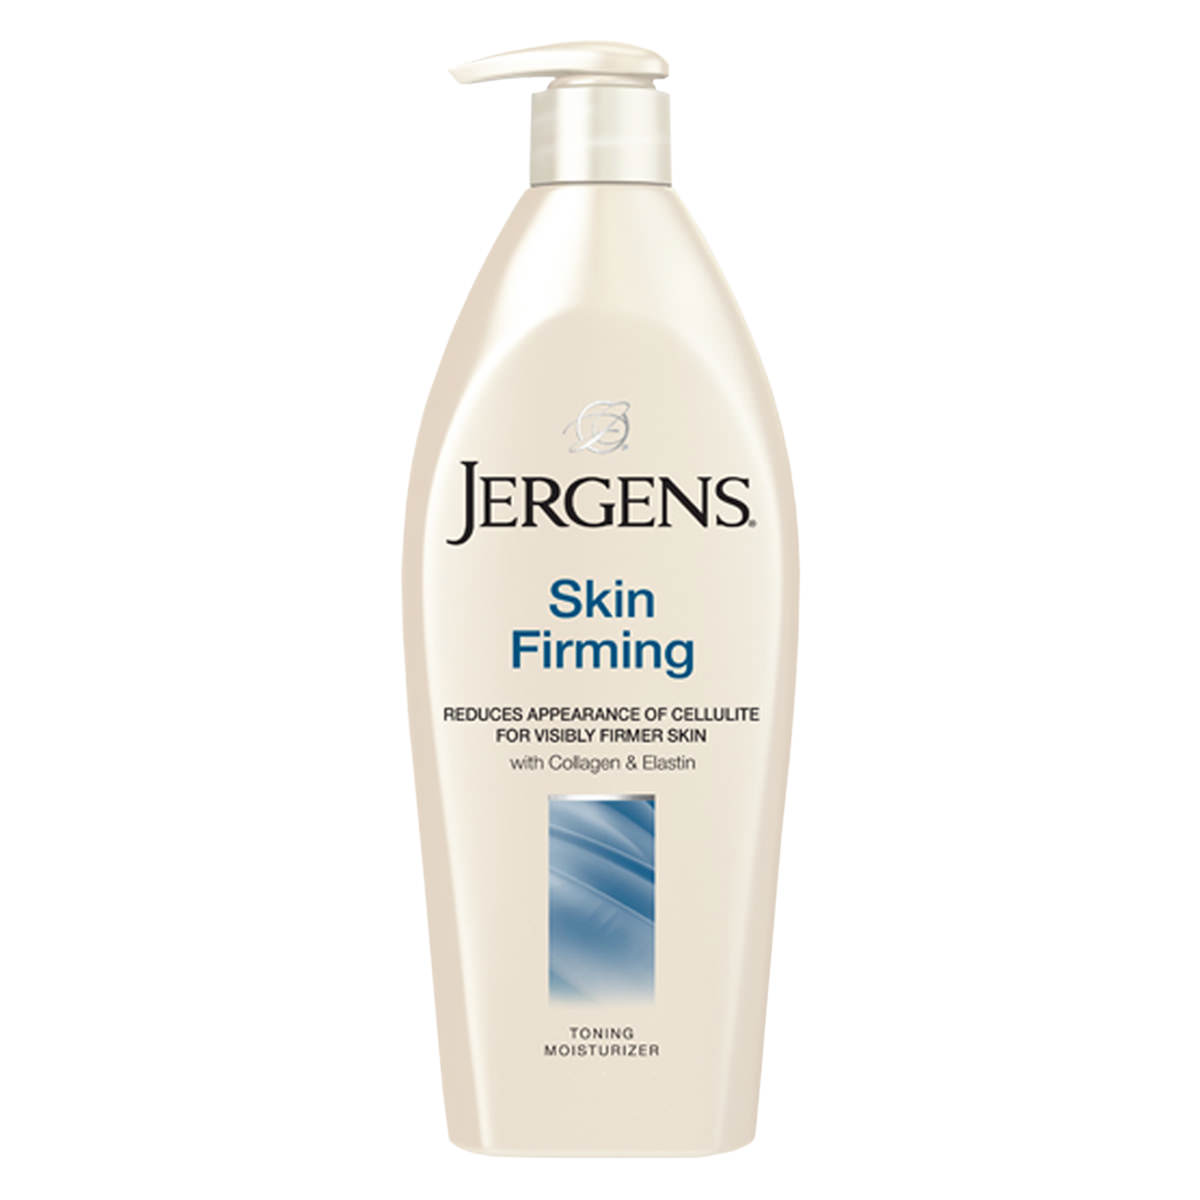 Jergens-Skin-Firming-Toning-Moisturizer-sfw(1)